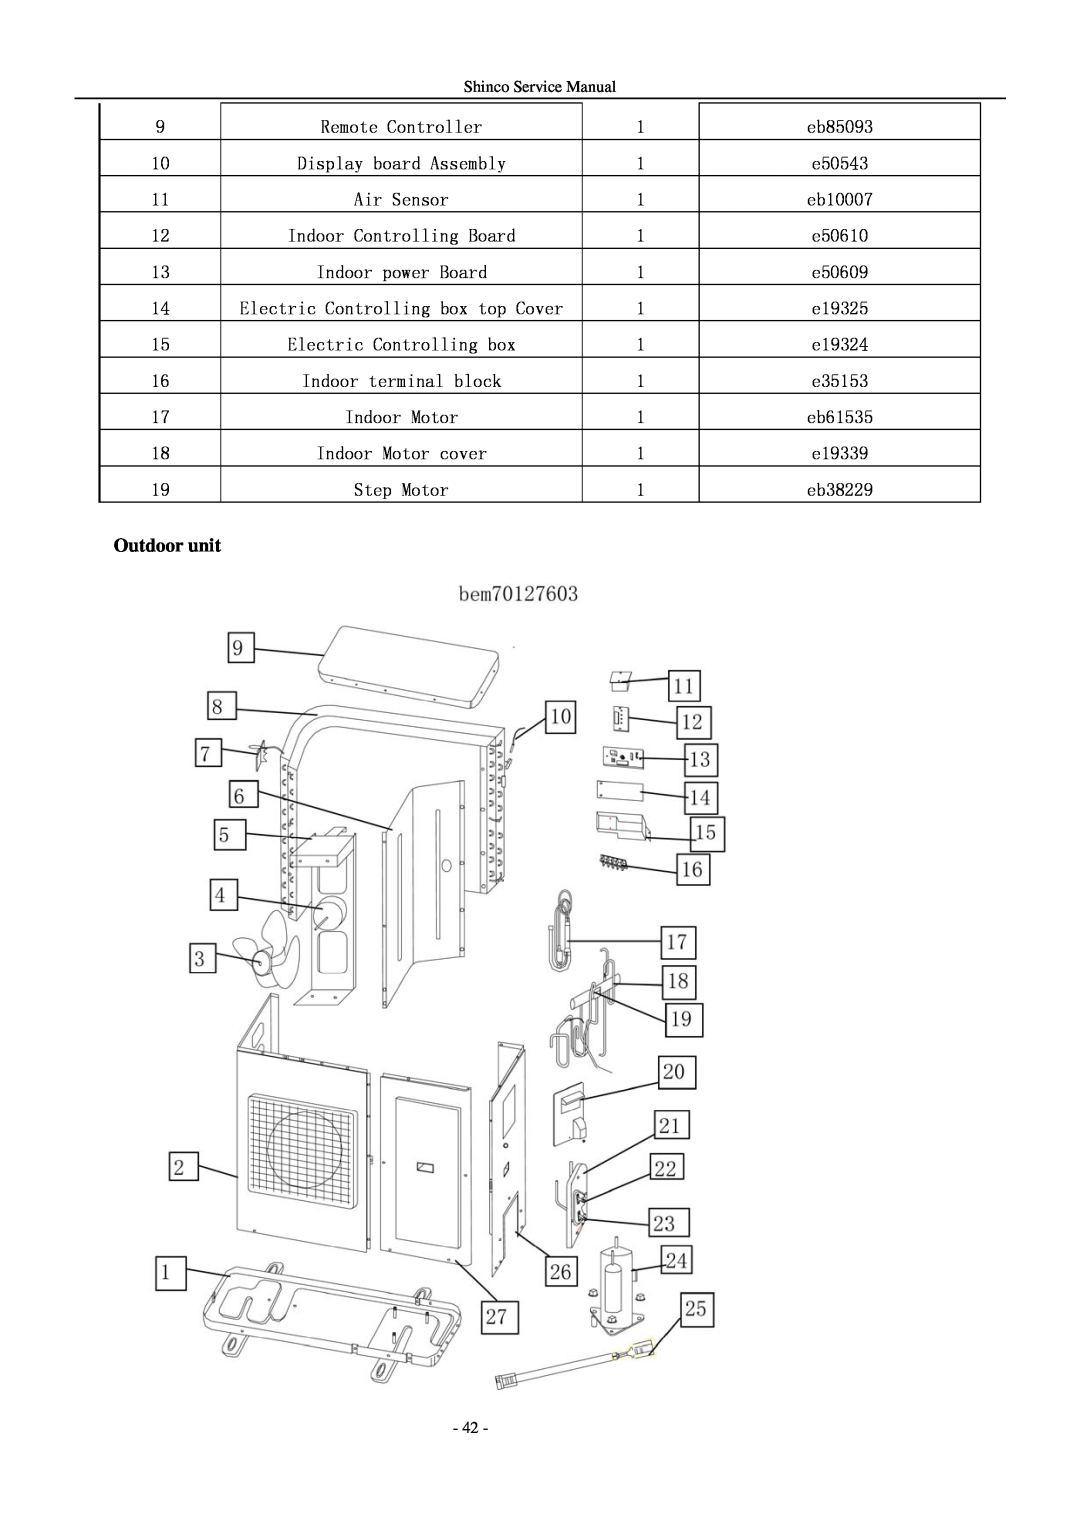 Shinco KFR-25GWZ BM service manual Remote Controller, Outdoor unit 